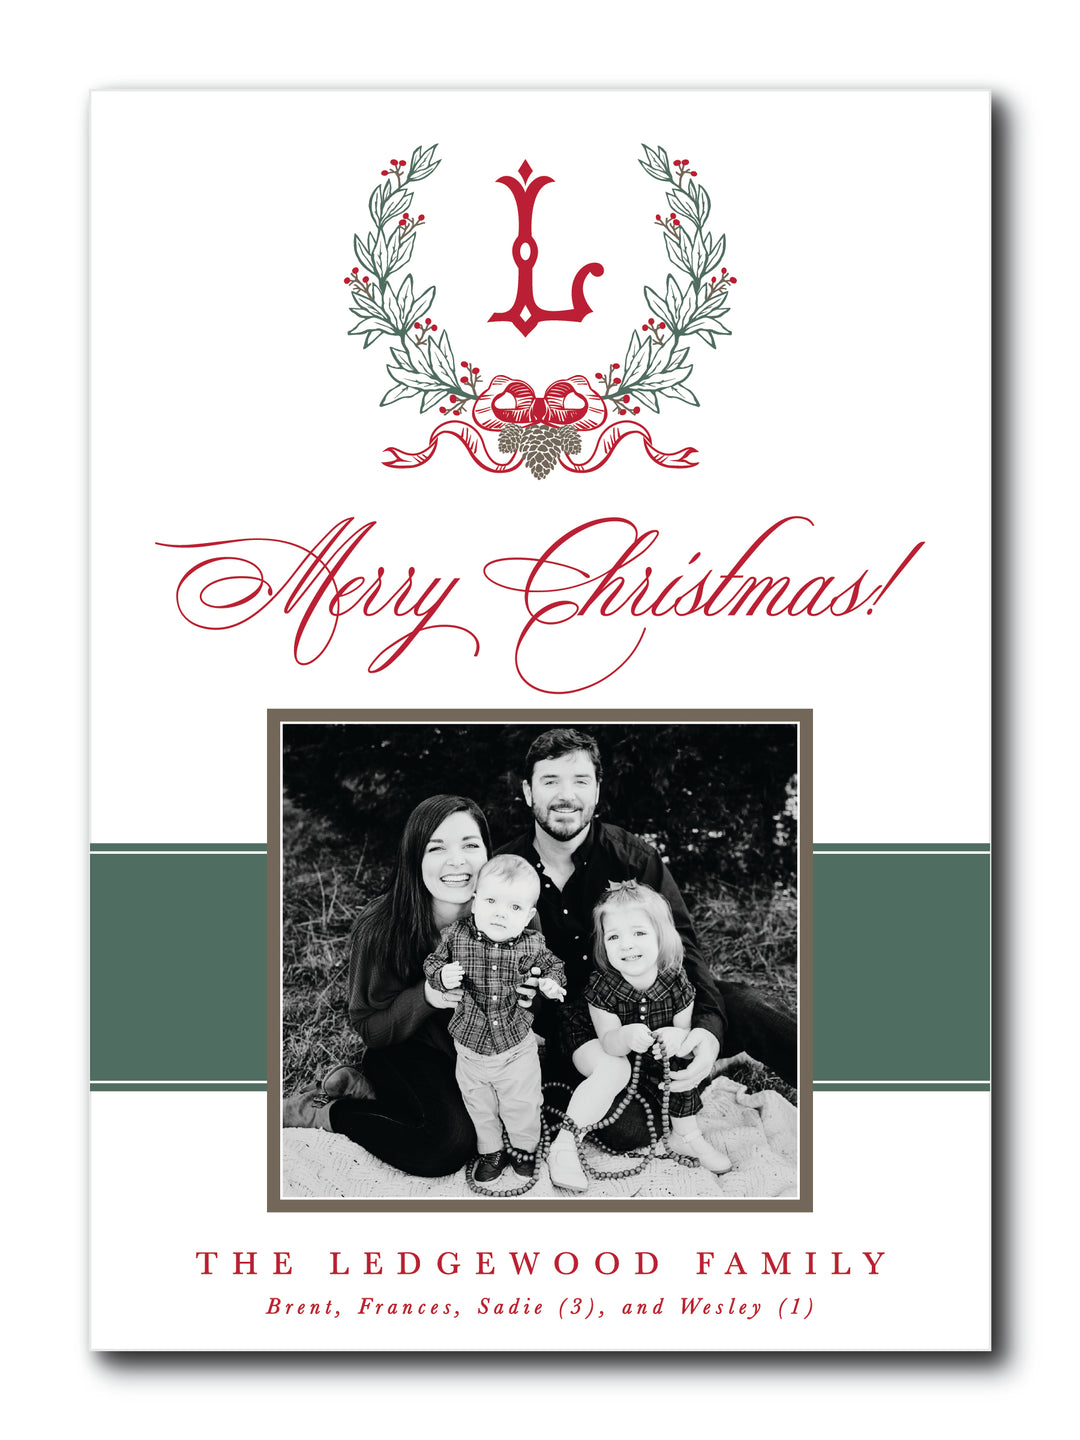 The Ledgewood Christmas Card